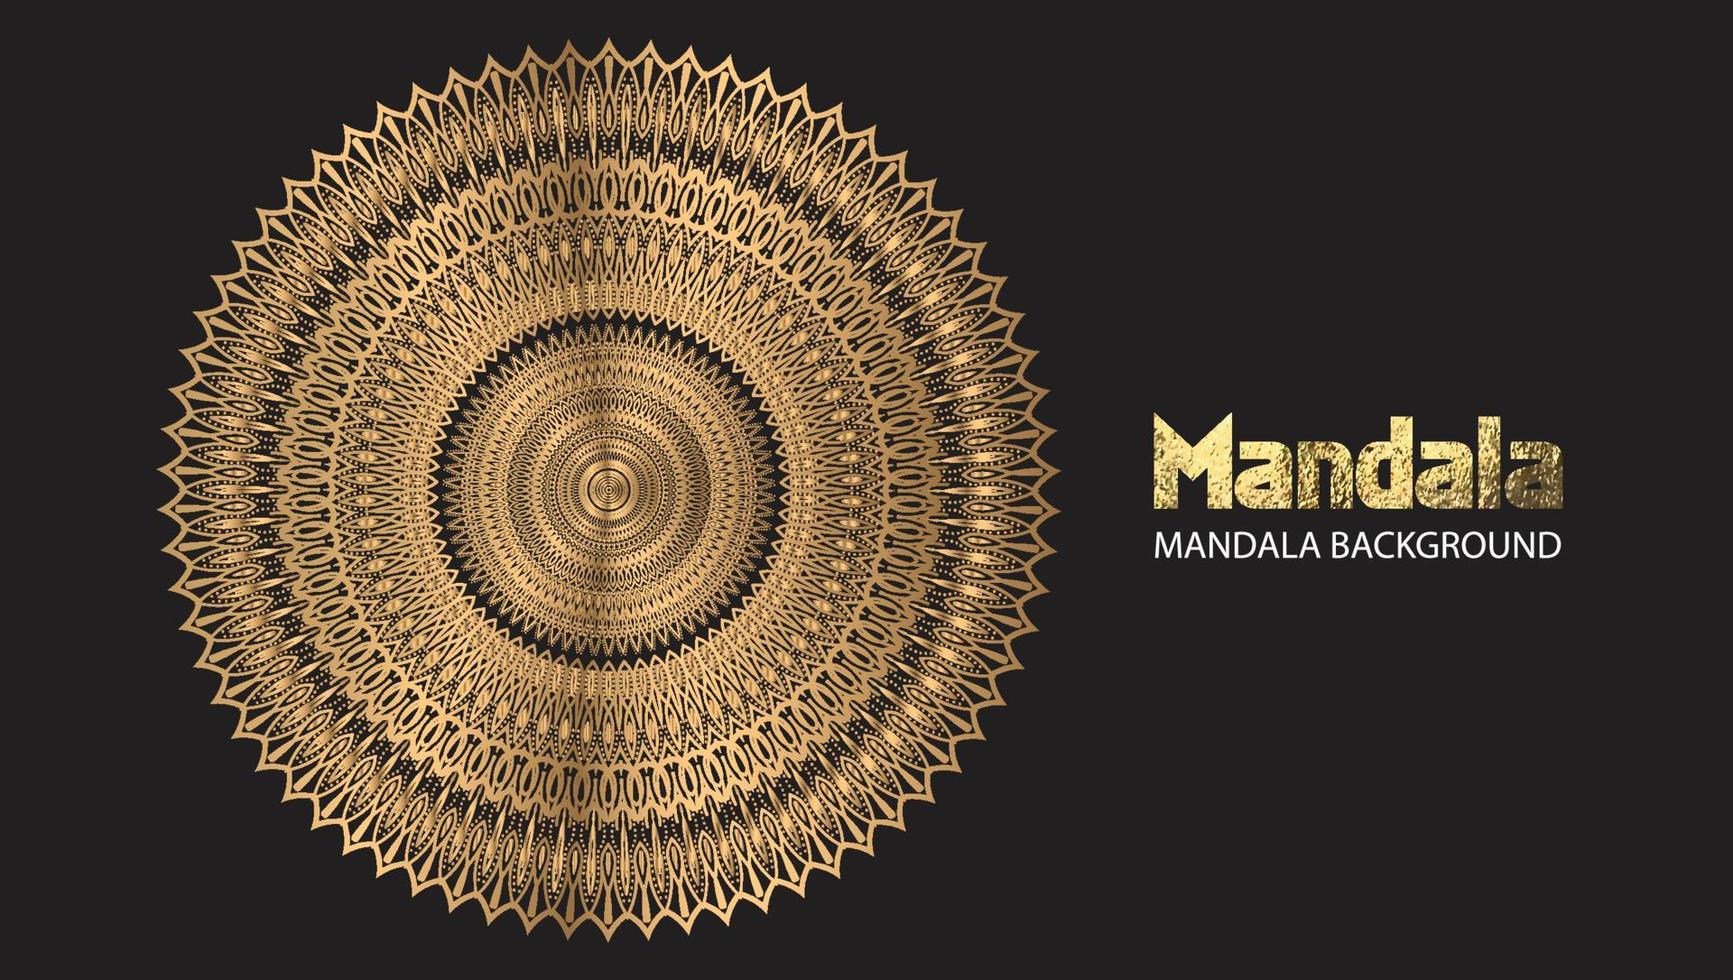 Mandala design mandala vector round luxury design golden brush text.